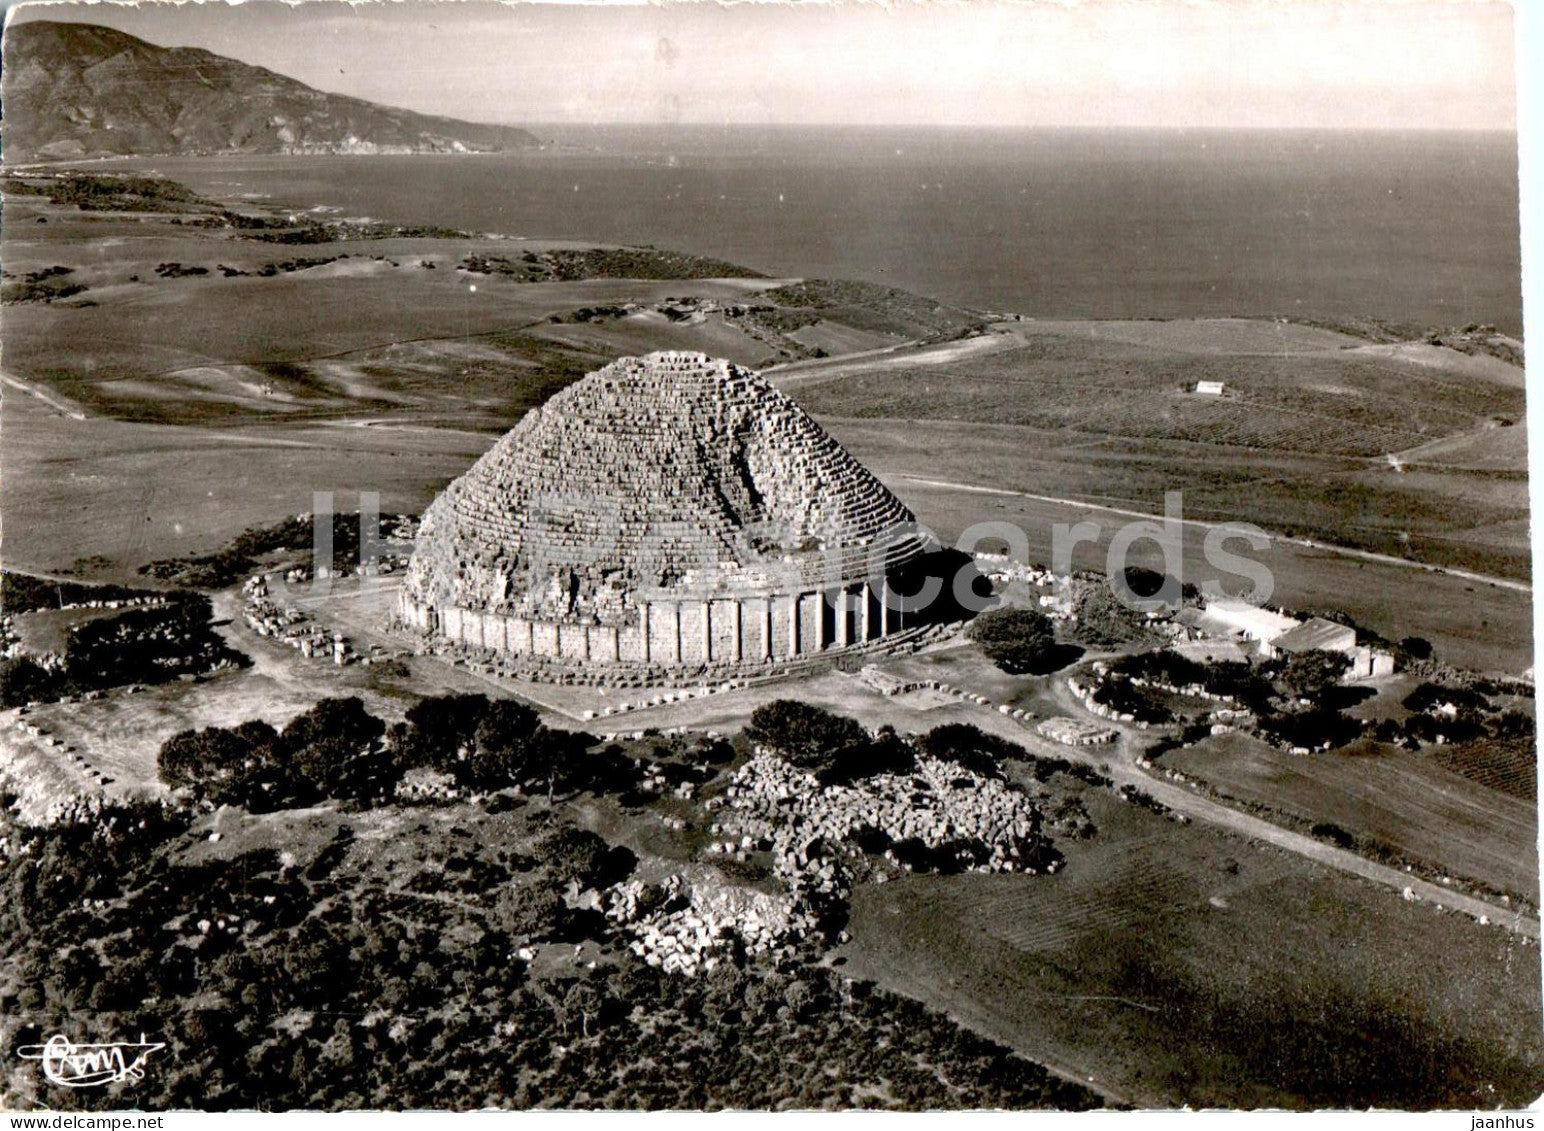 Environs de Alger Tipasa - Royal Mausoleum of Mauretania - 52 - old postcard - 1954 - Morocco - used - JH Postcards